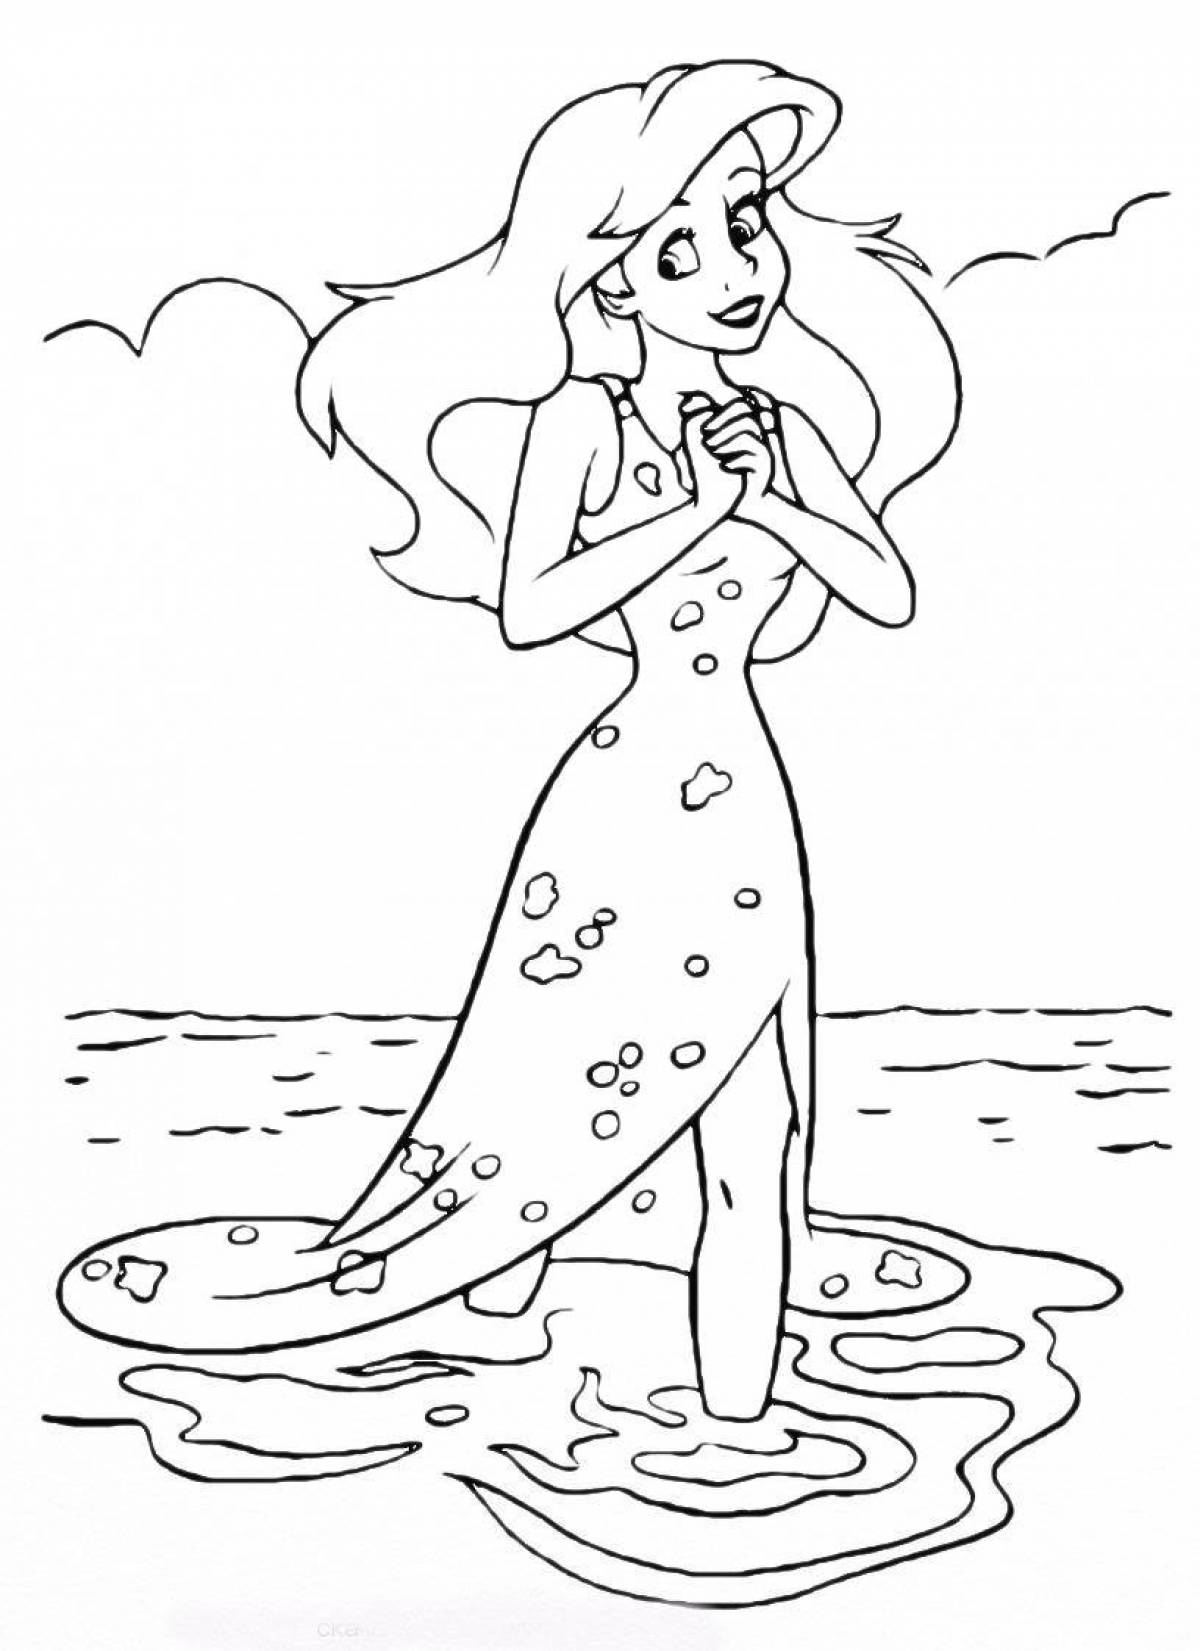 Bright mermaid coloring page